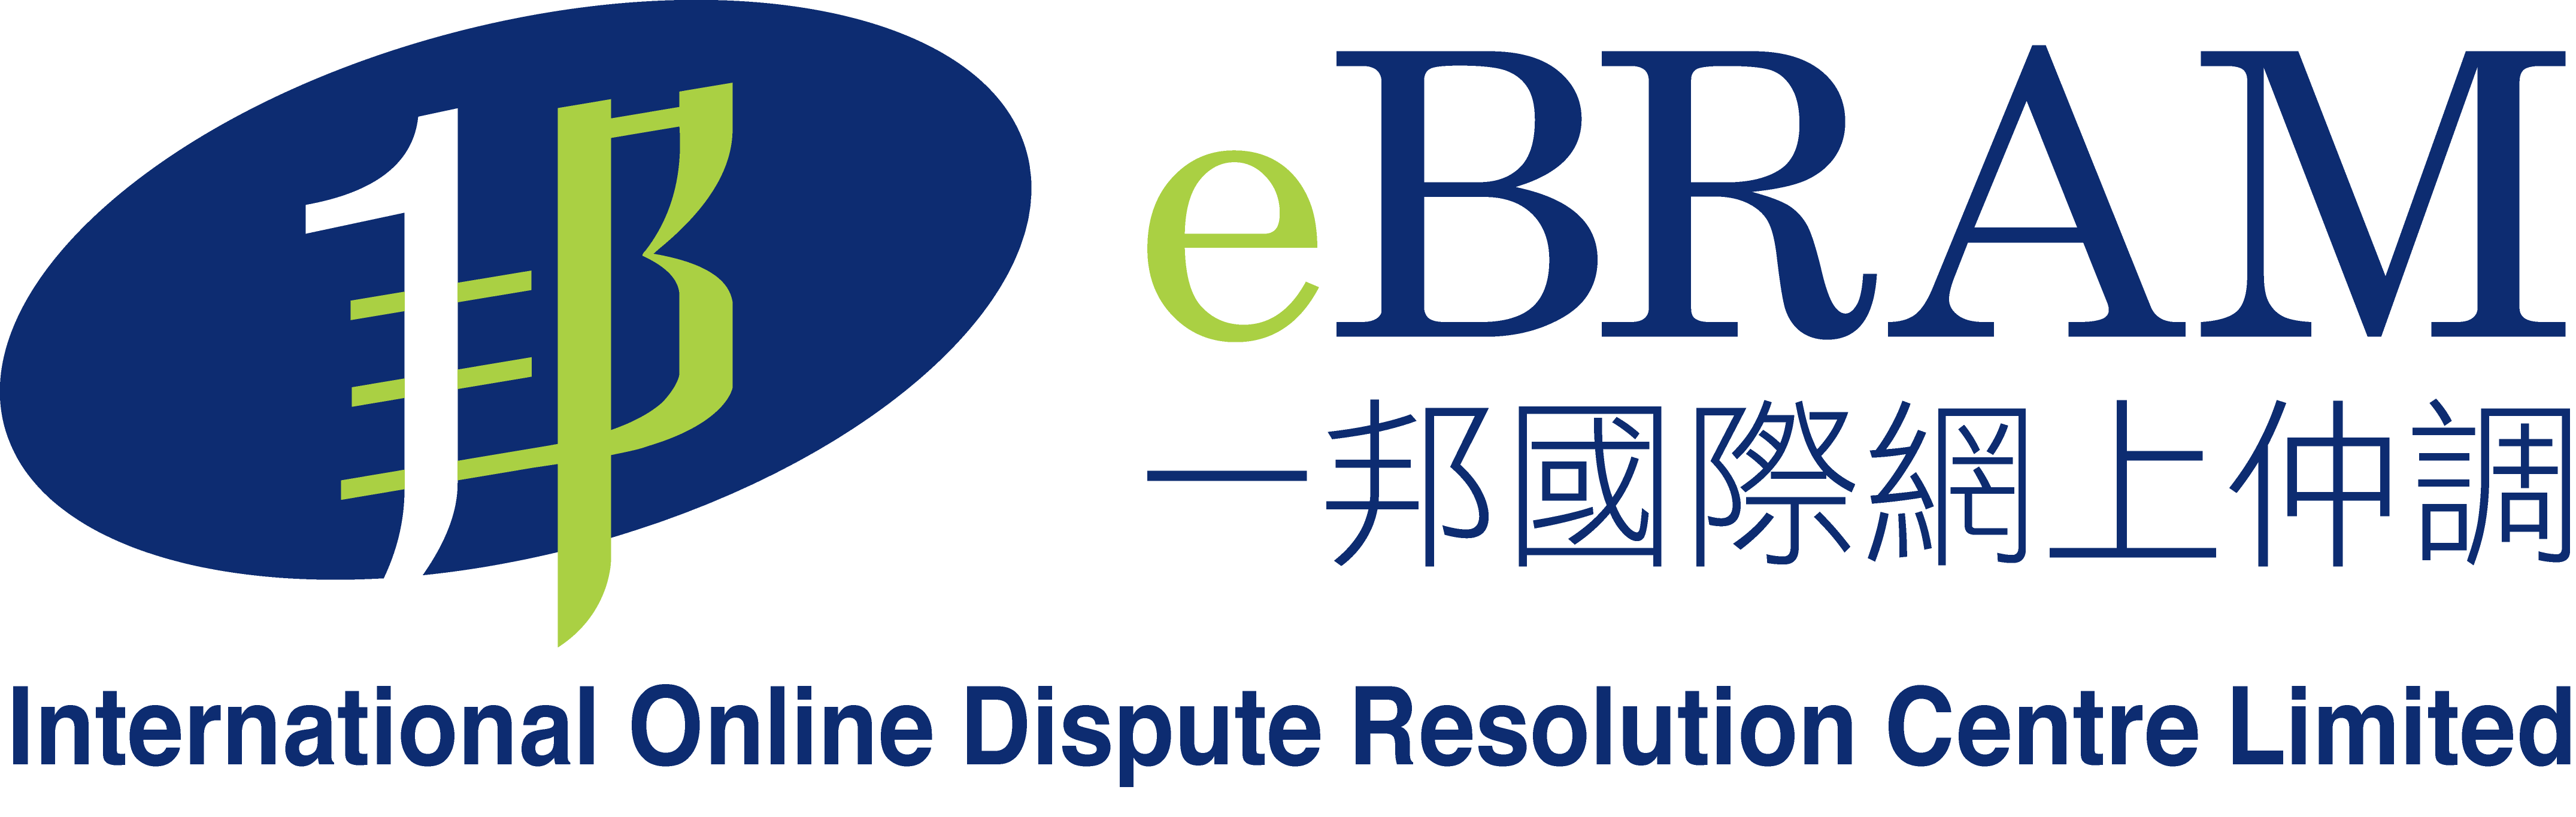 logo of PAW partner eBRAM International Online Dispute Resolution Centre Limited